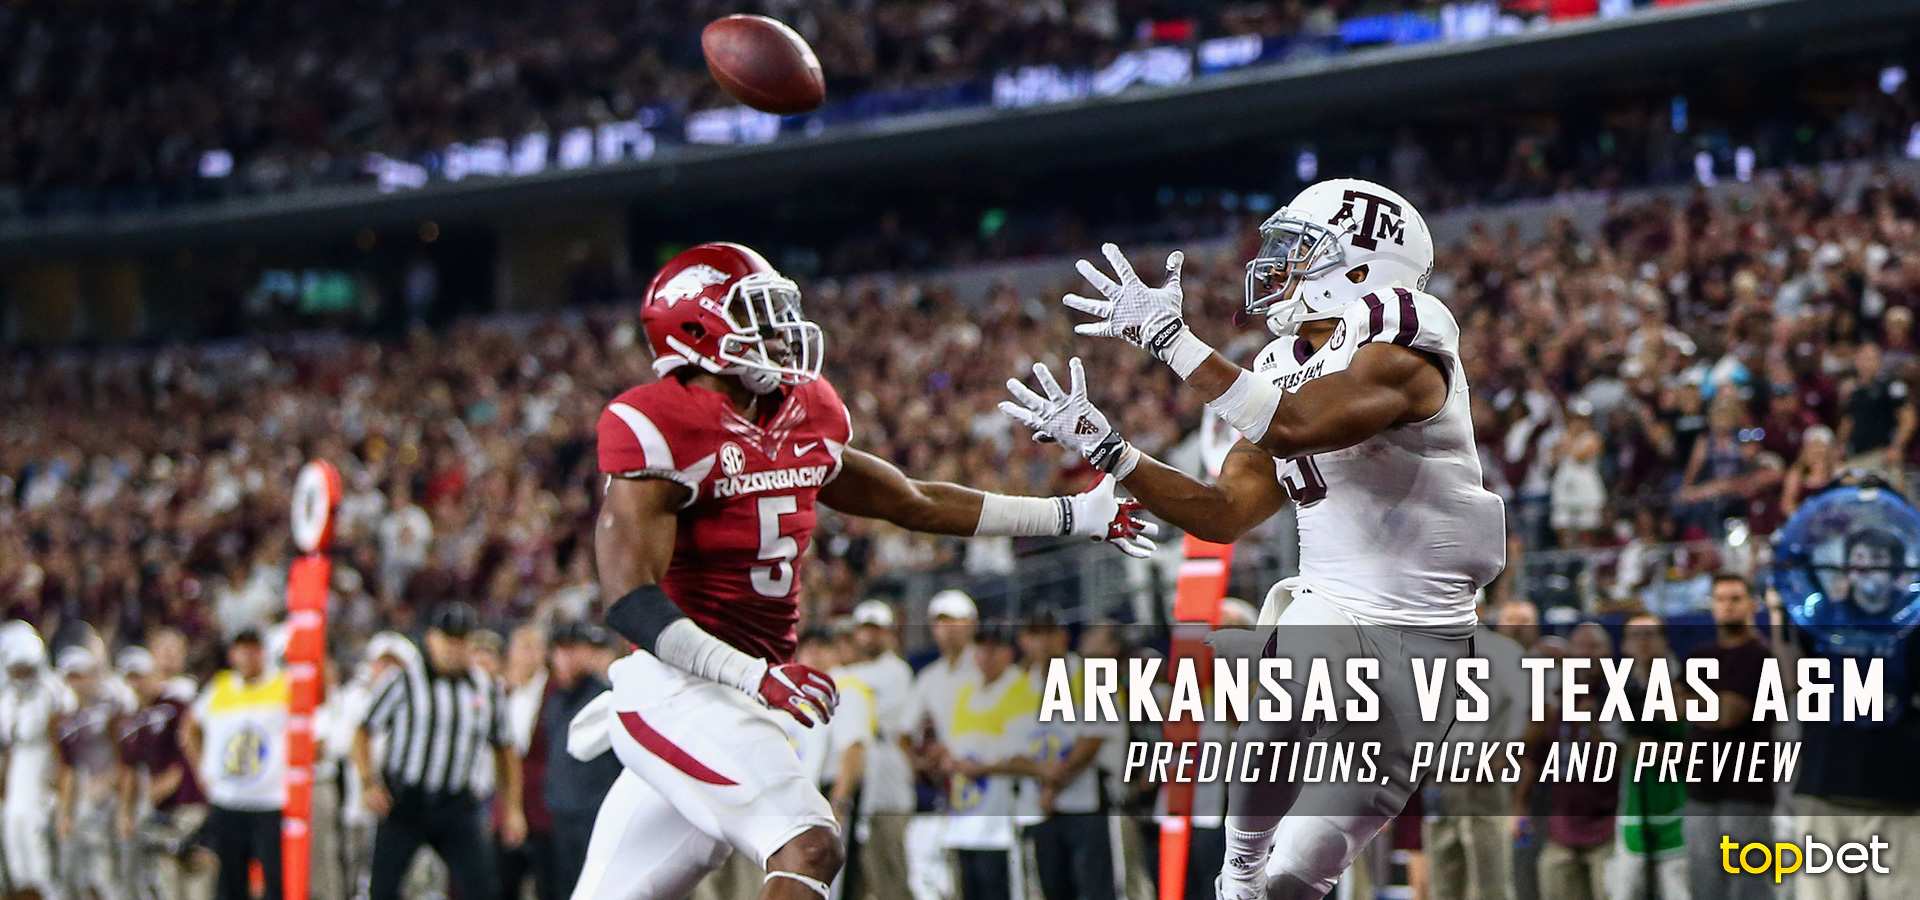 Arkansas vs Texas A&M Football Predictions, Picks & Preview